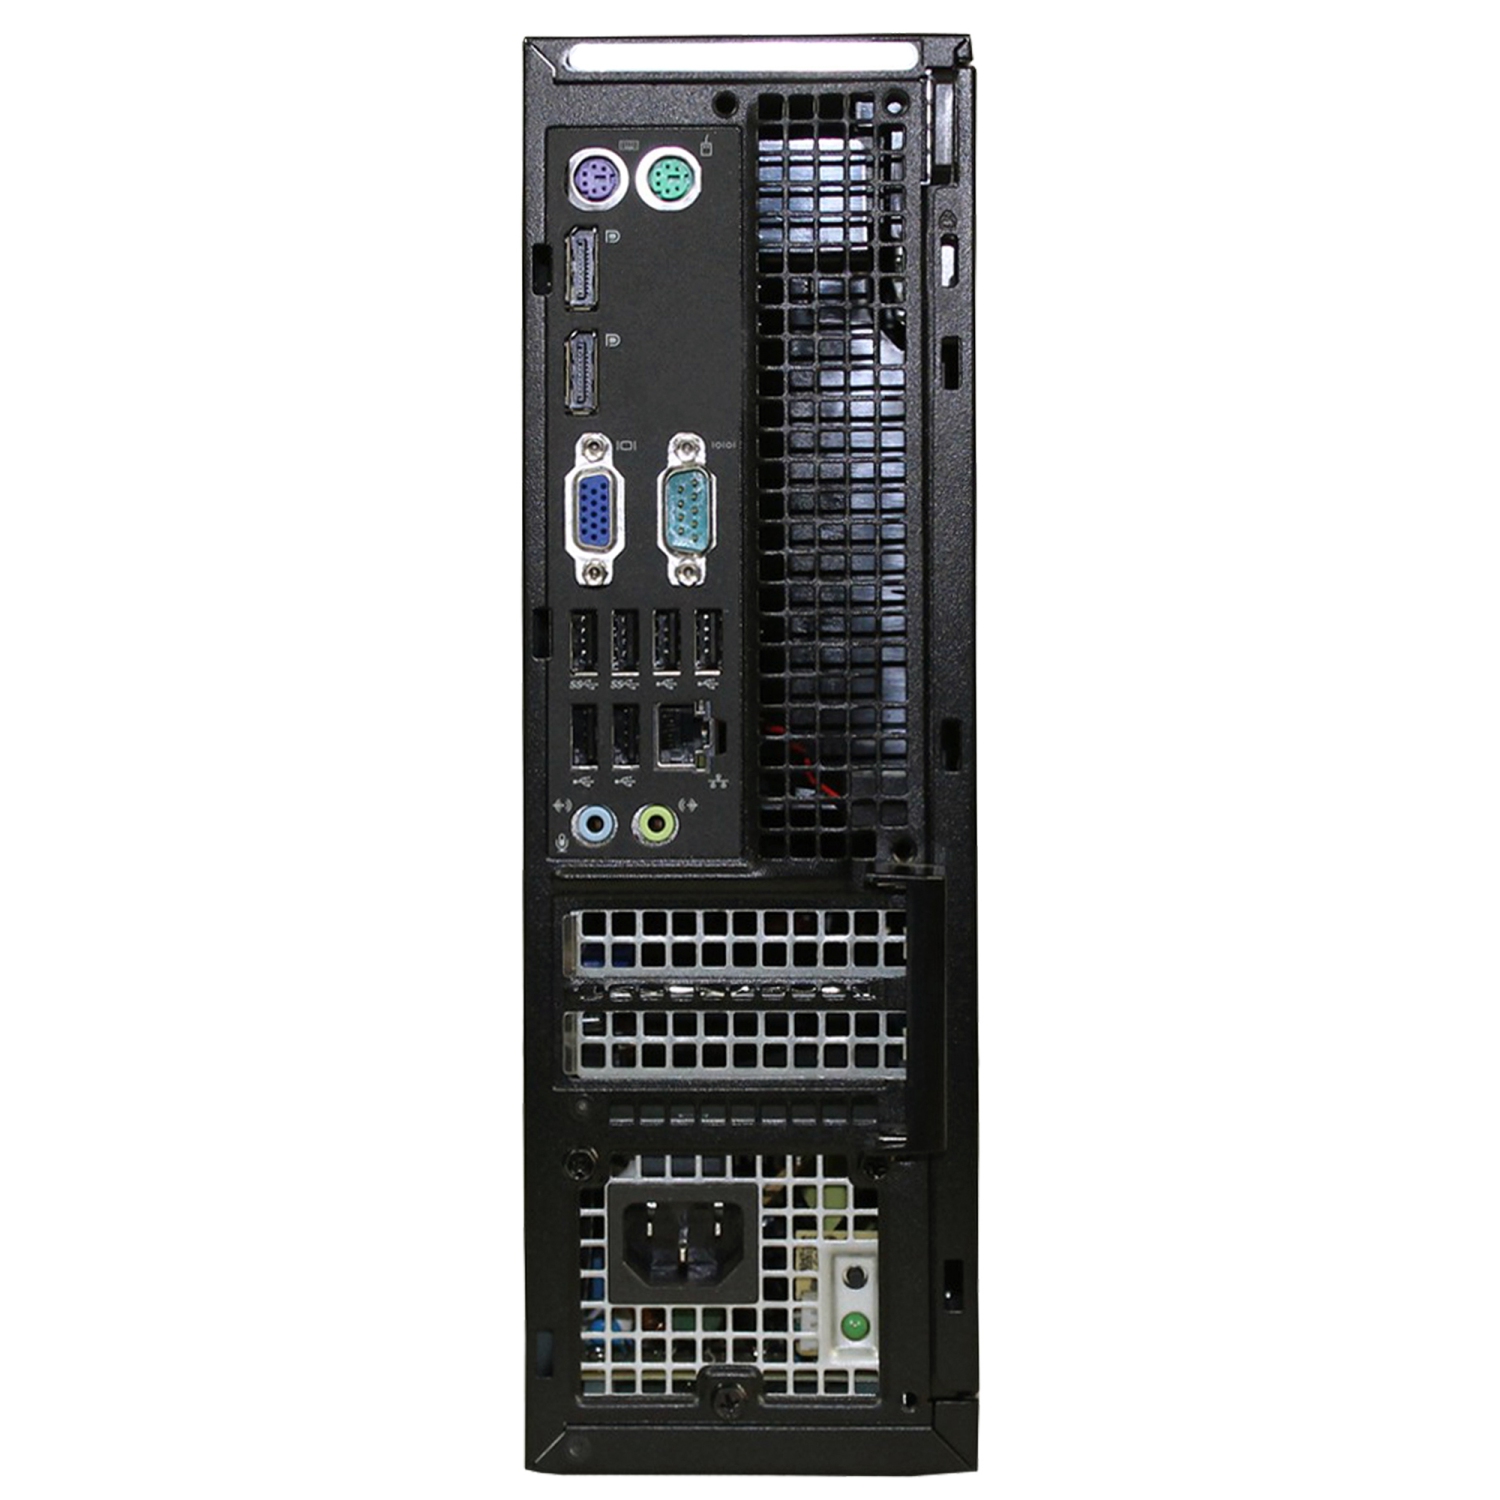 Refurbished (Good) - Dell OptiPlex 7020 SFF Desktop Computer with